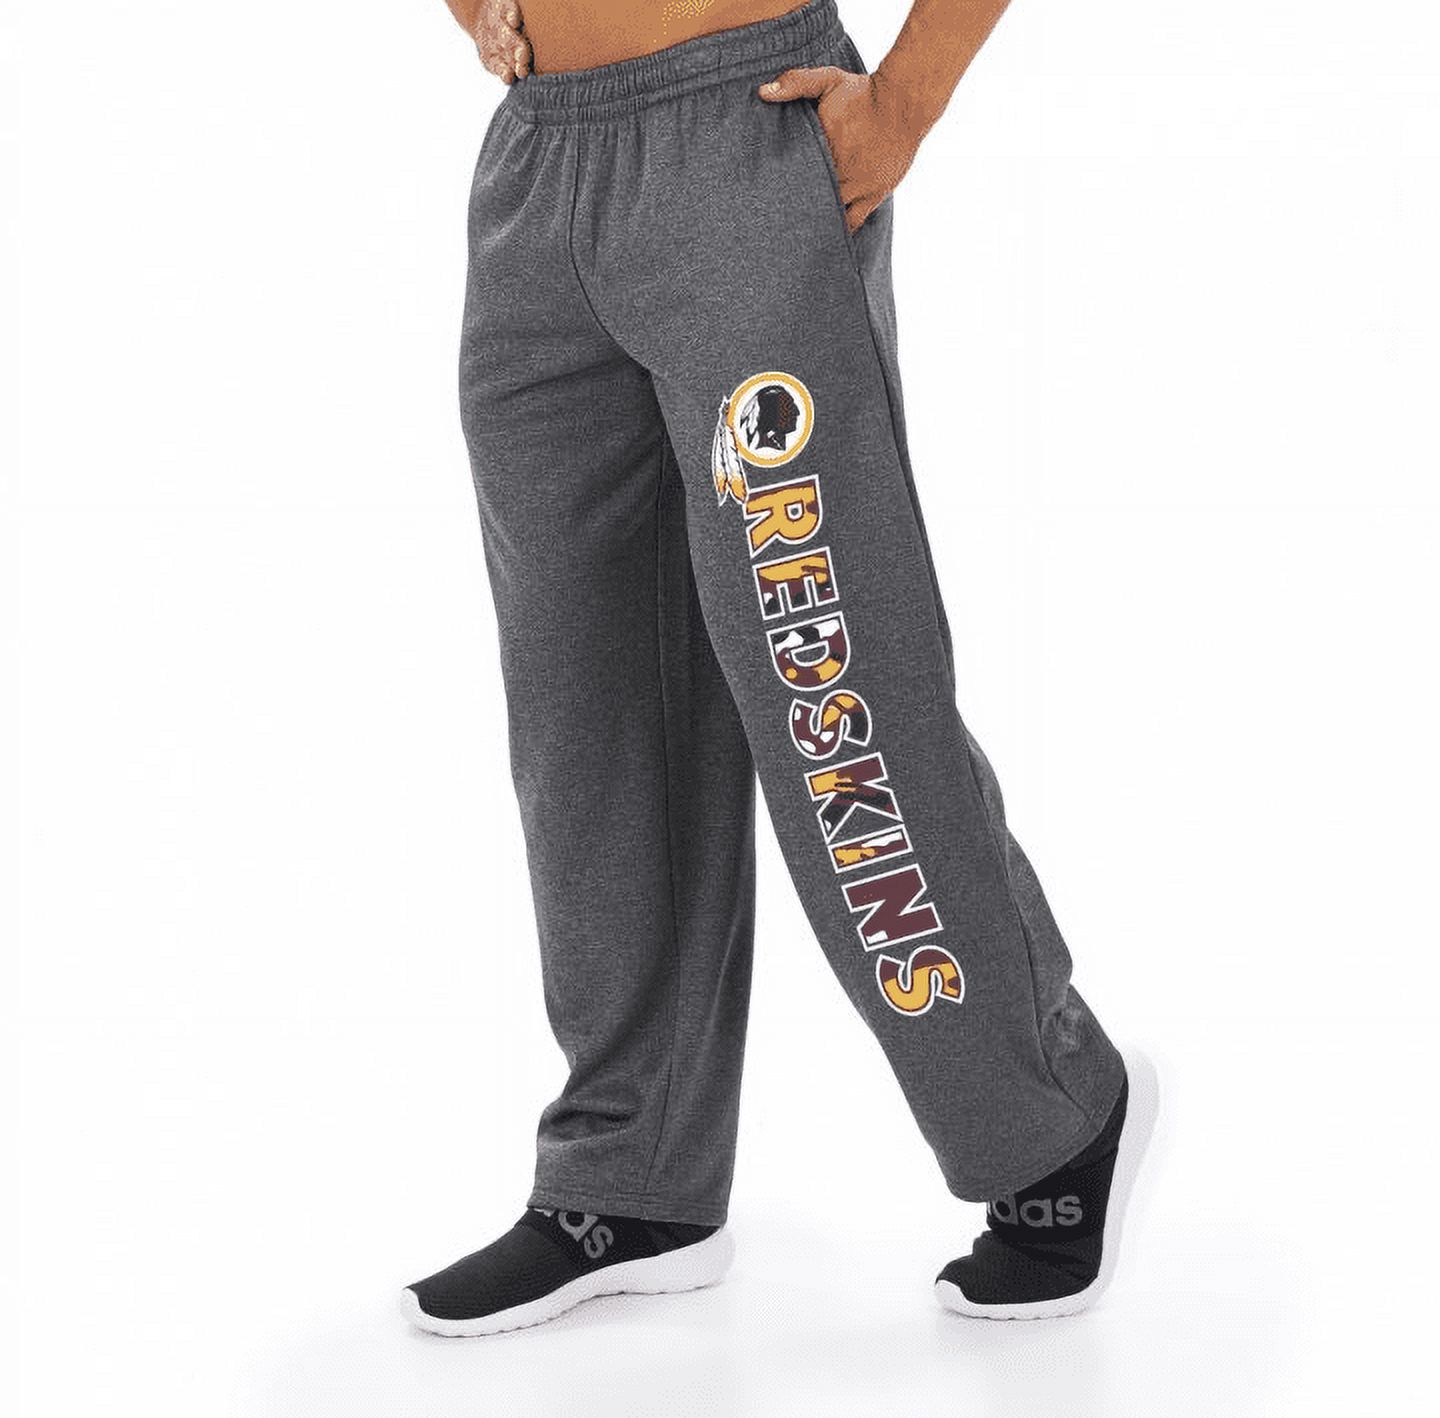 Zubaz NFL Men's Washington Poly Fleece Dark Heather Gray Sweatpants - image 1 of 1